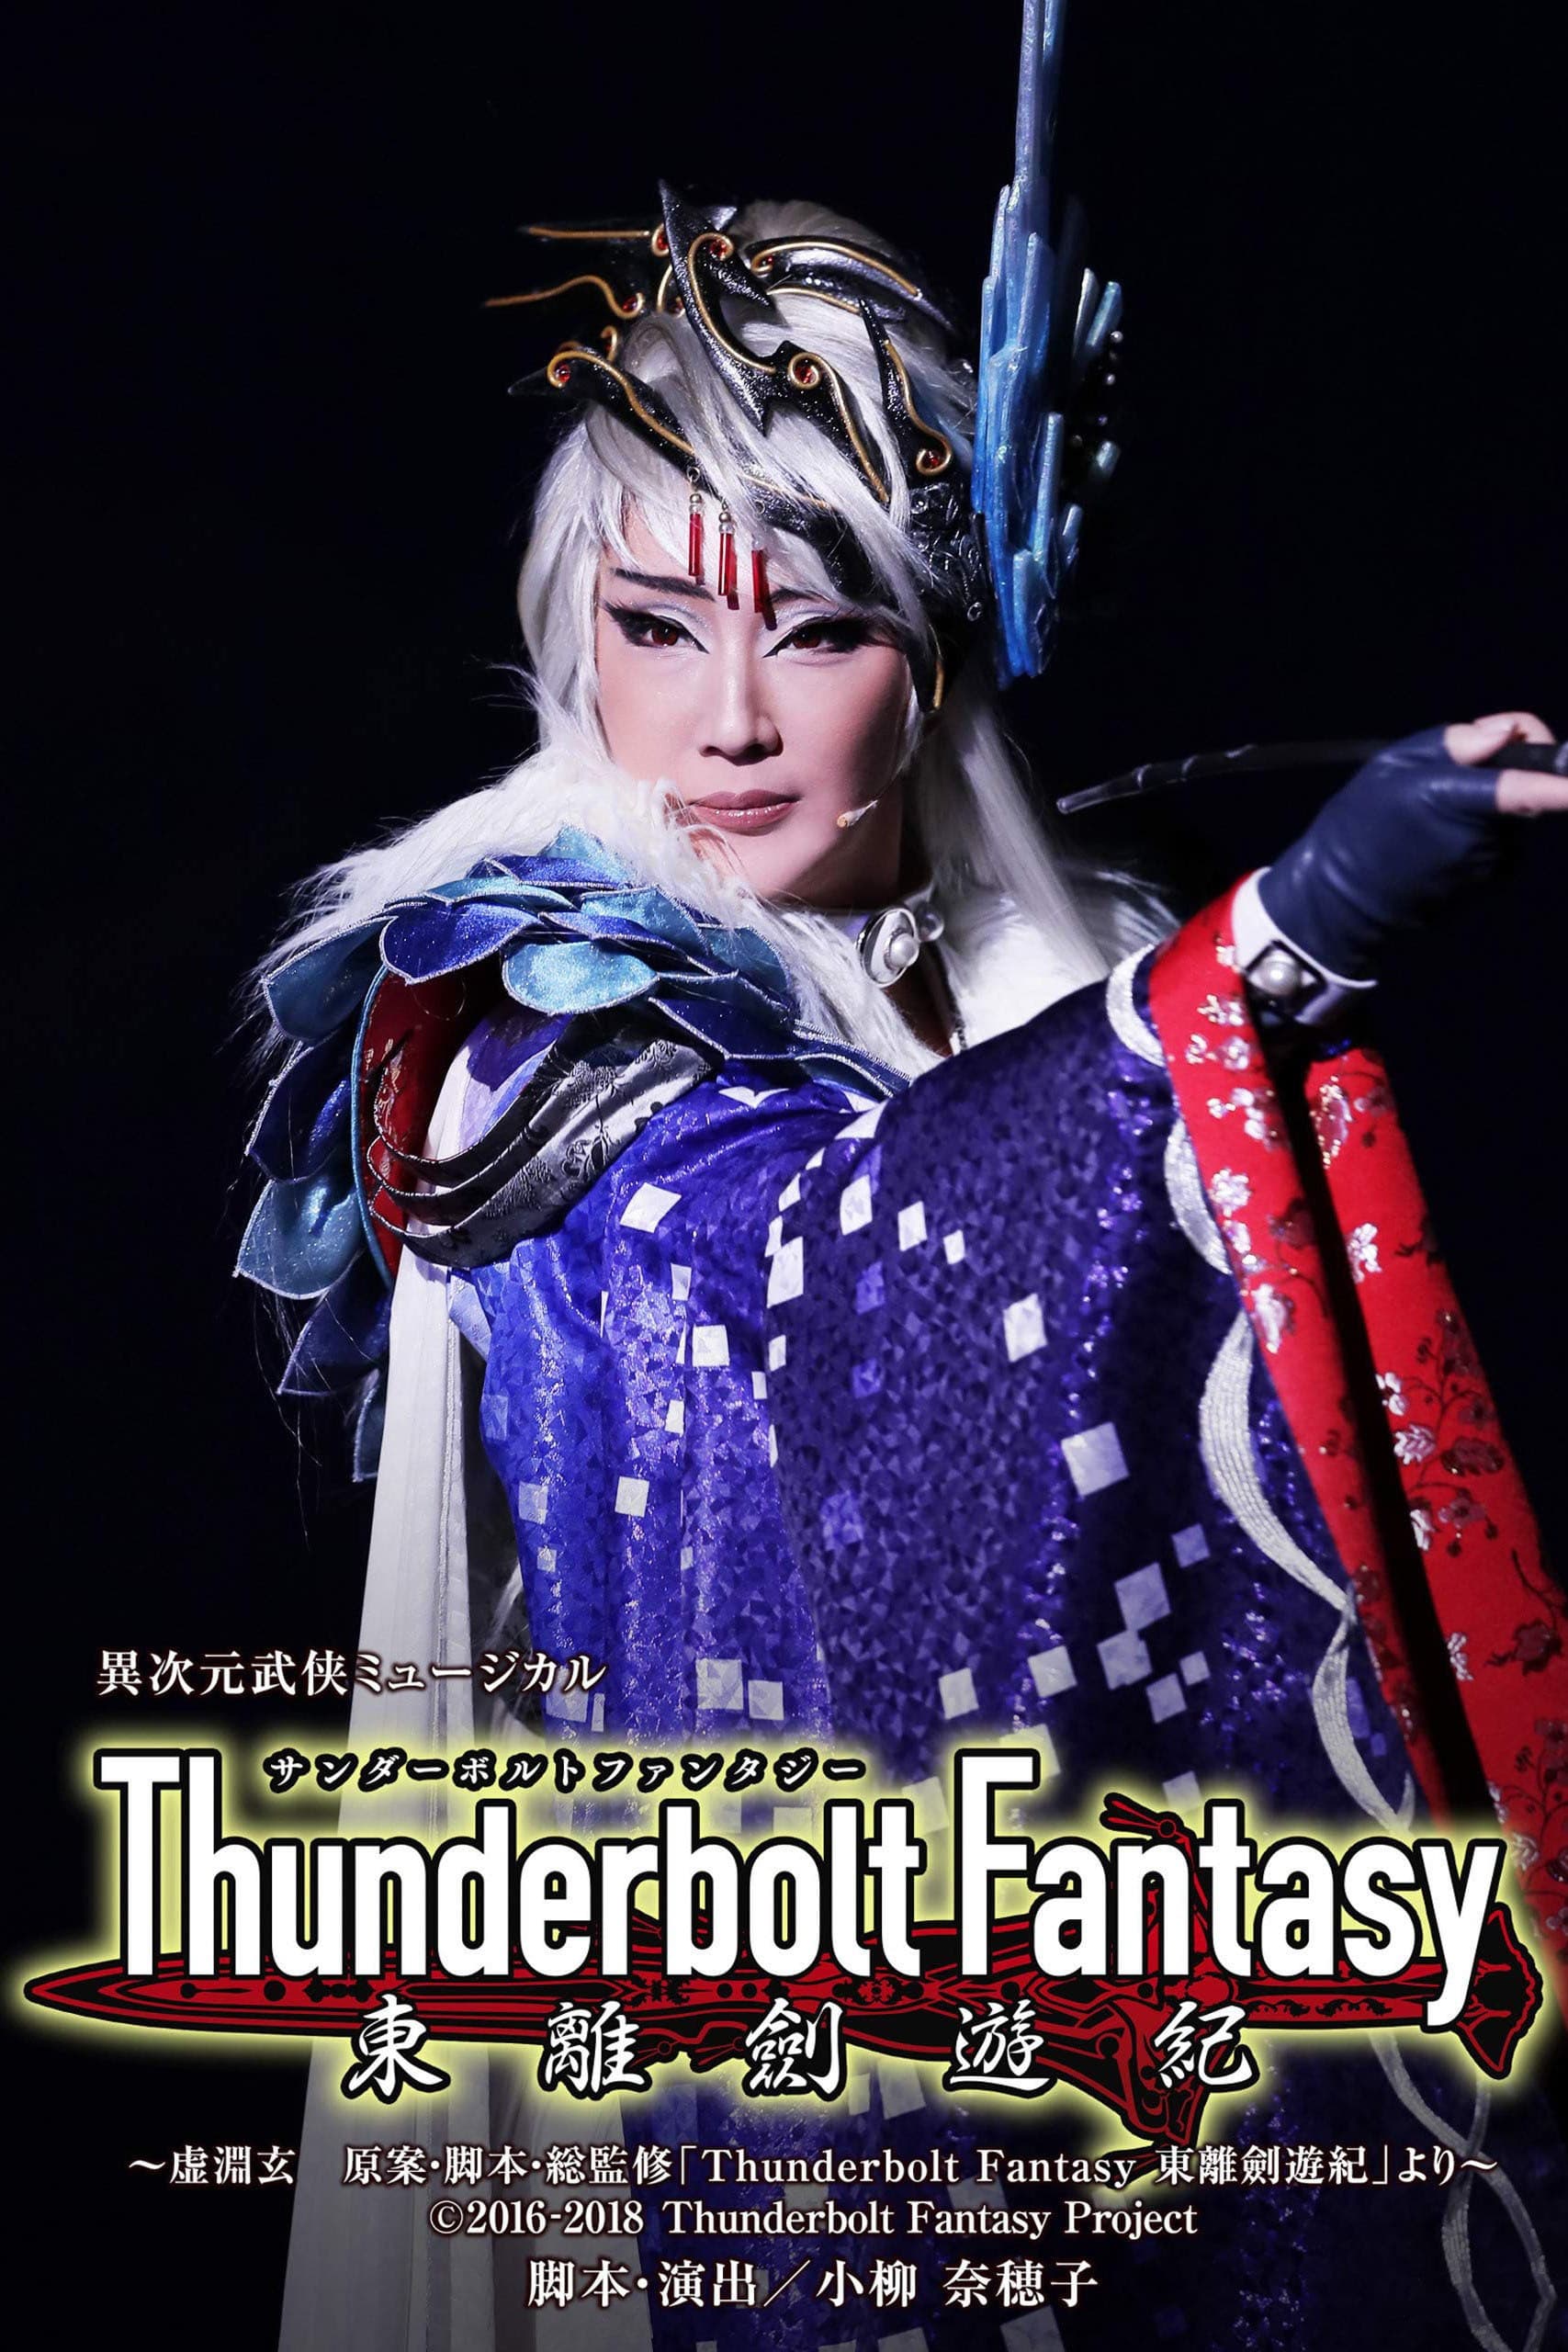 Thunderbolt Fantasy: Sword Travels from the East